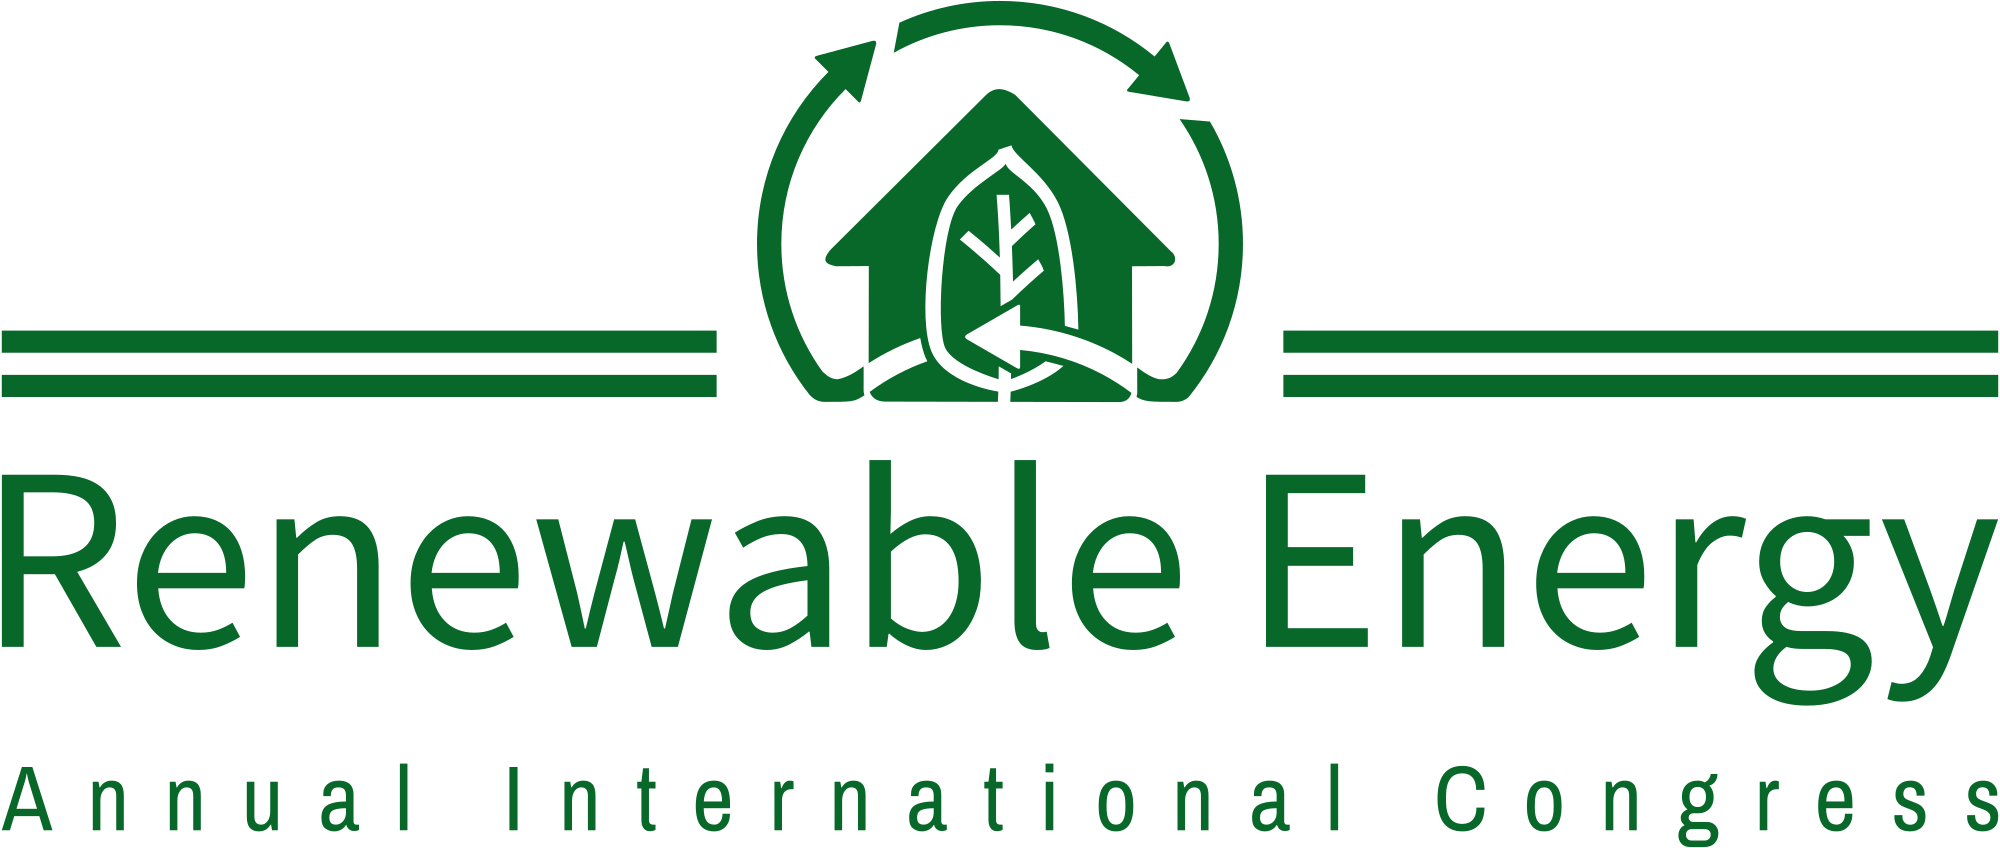 Renewable Energy Congress